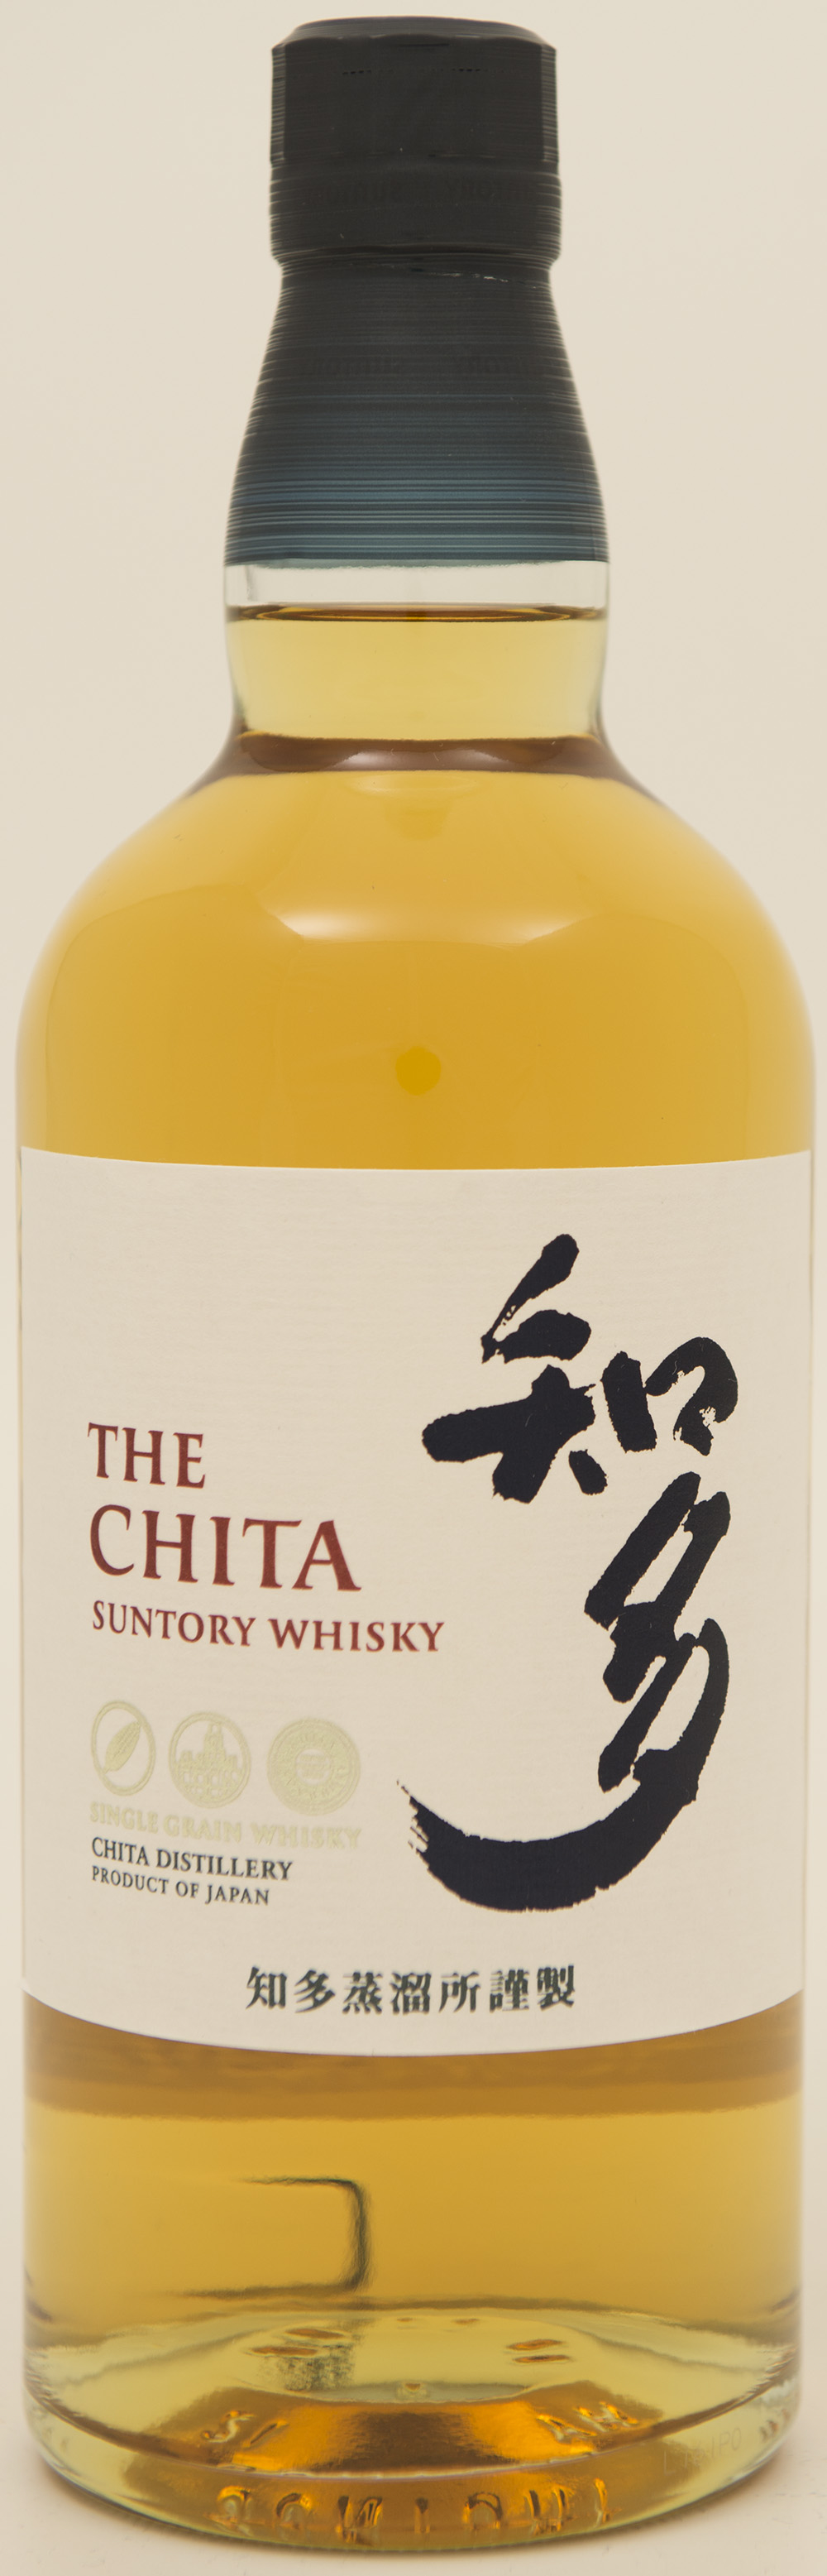 Billede: DSC_3735 - The Chita - bottle front.jpg